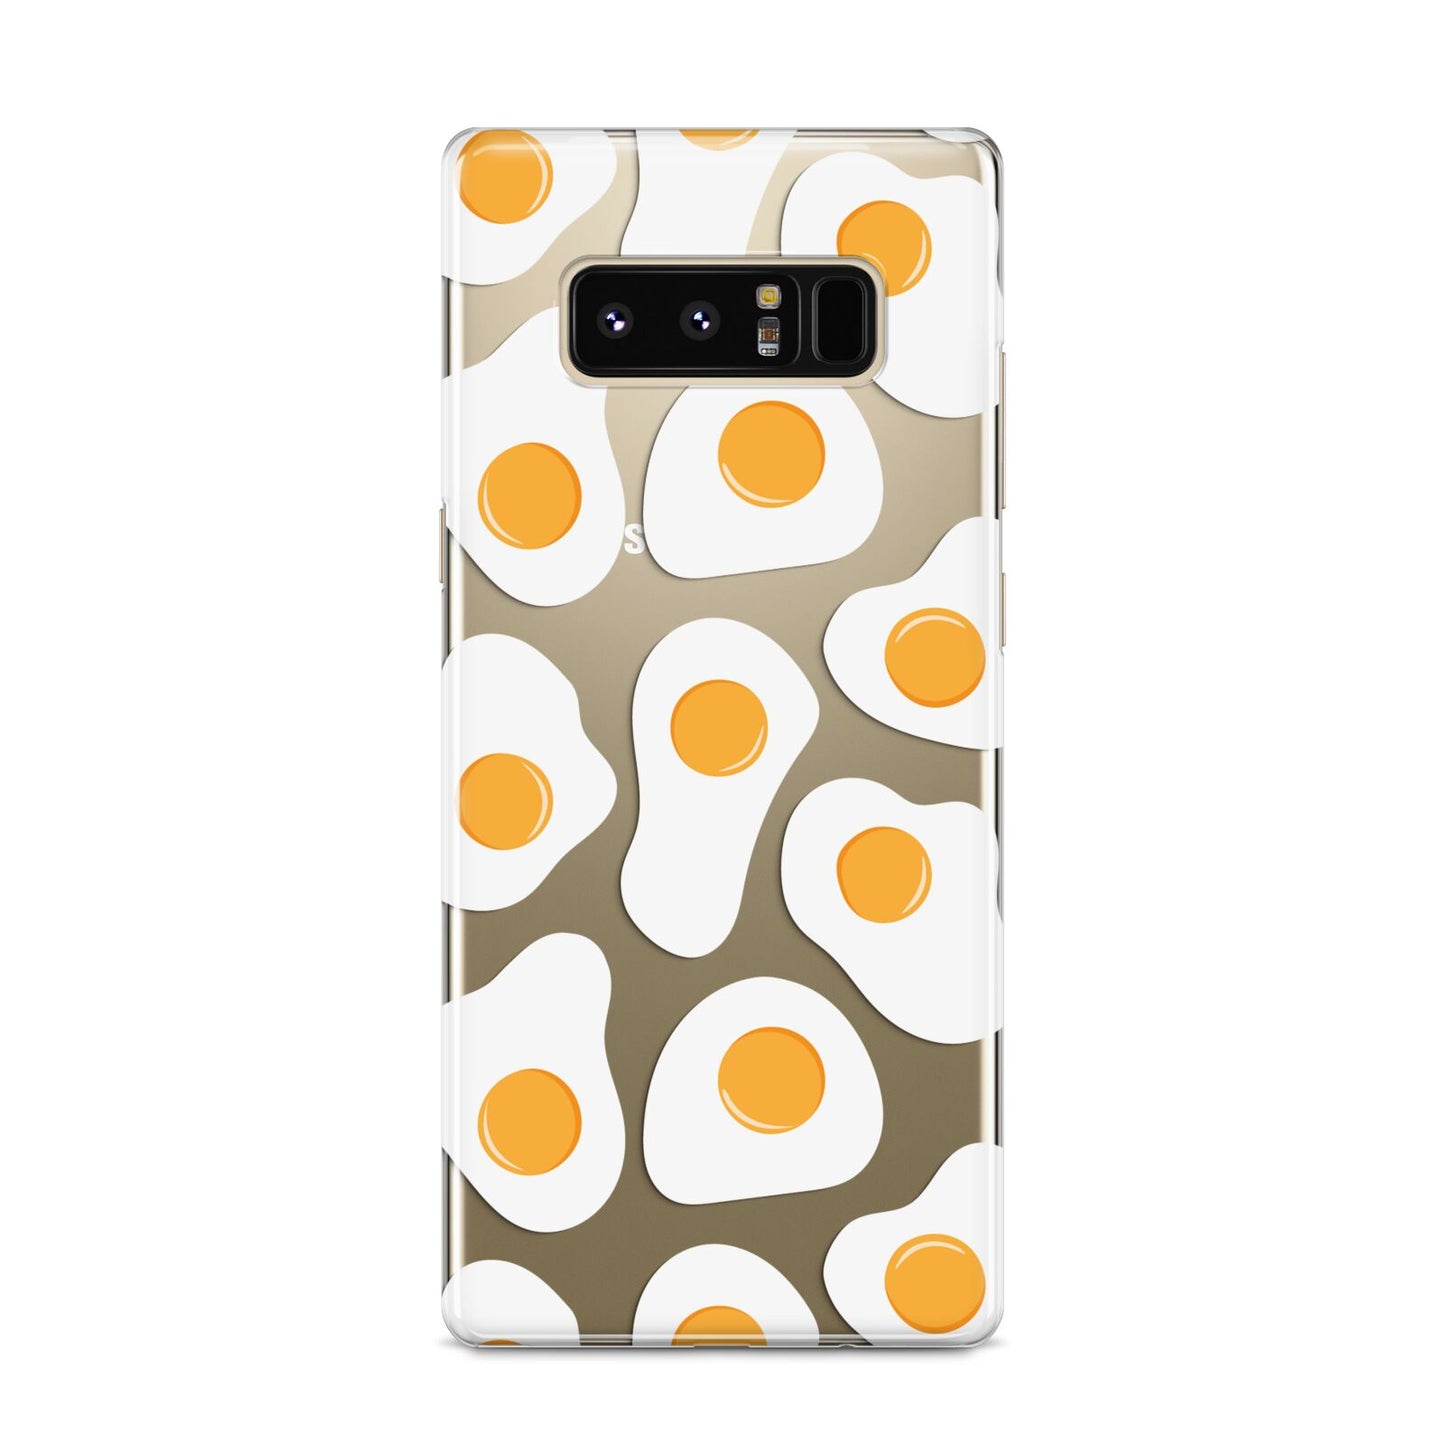 Fried Egg Samsung Galaxy S8 Case